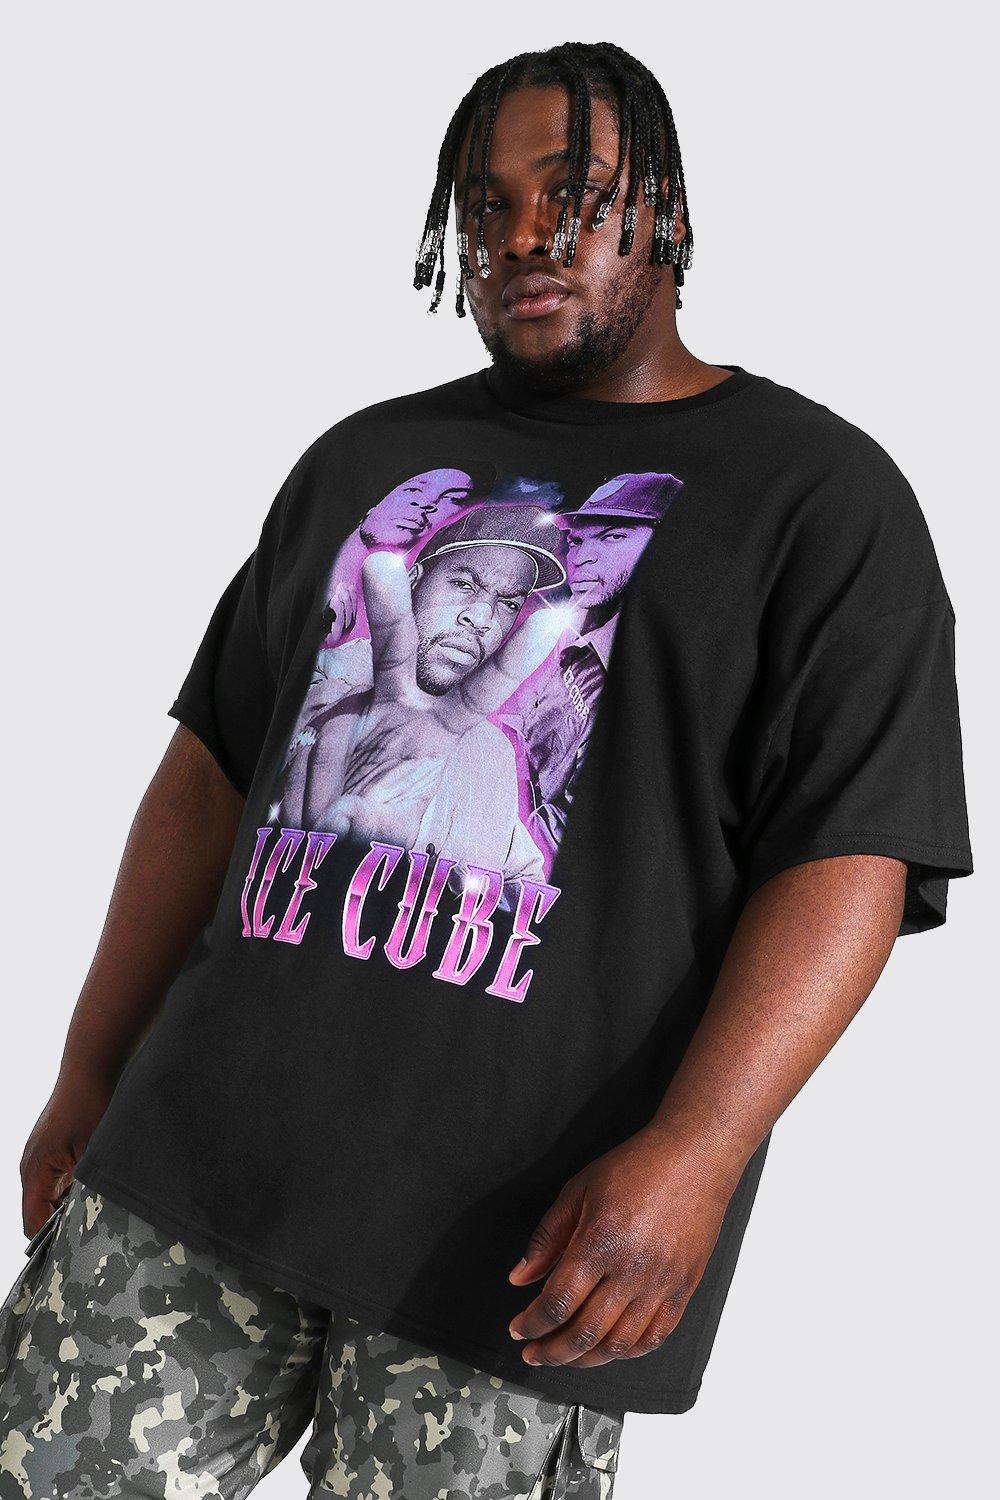 ICE CUBE Black T-Shirt Size XXL